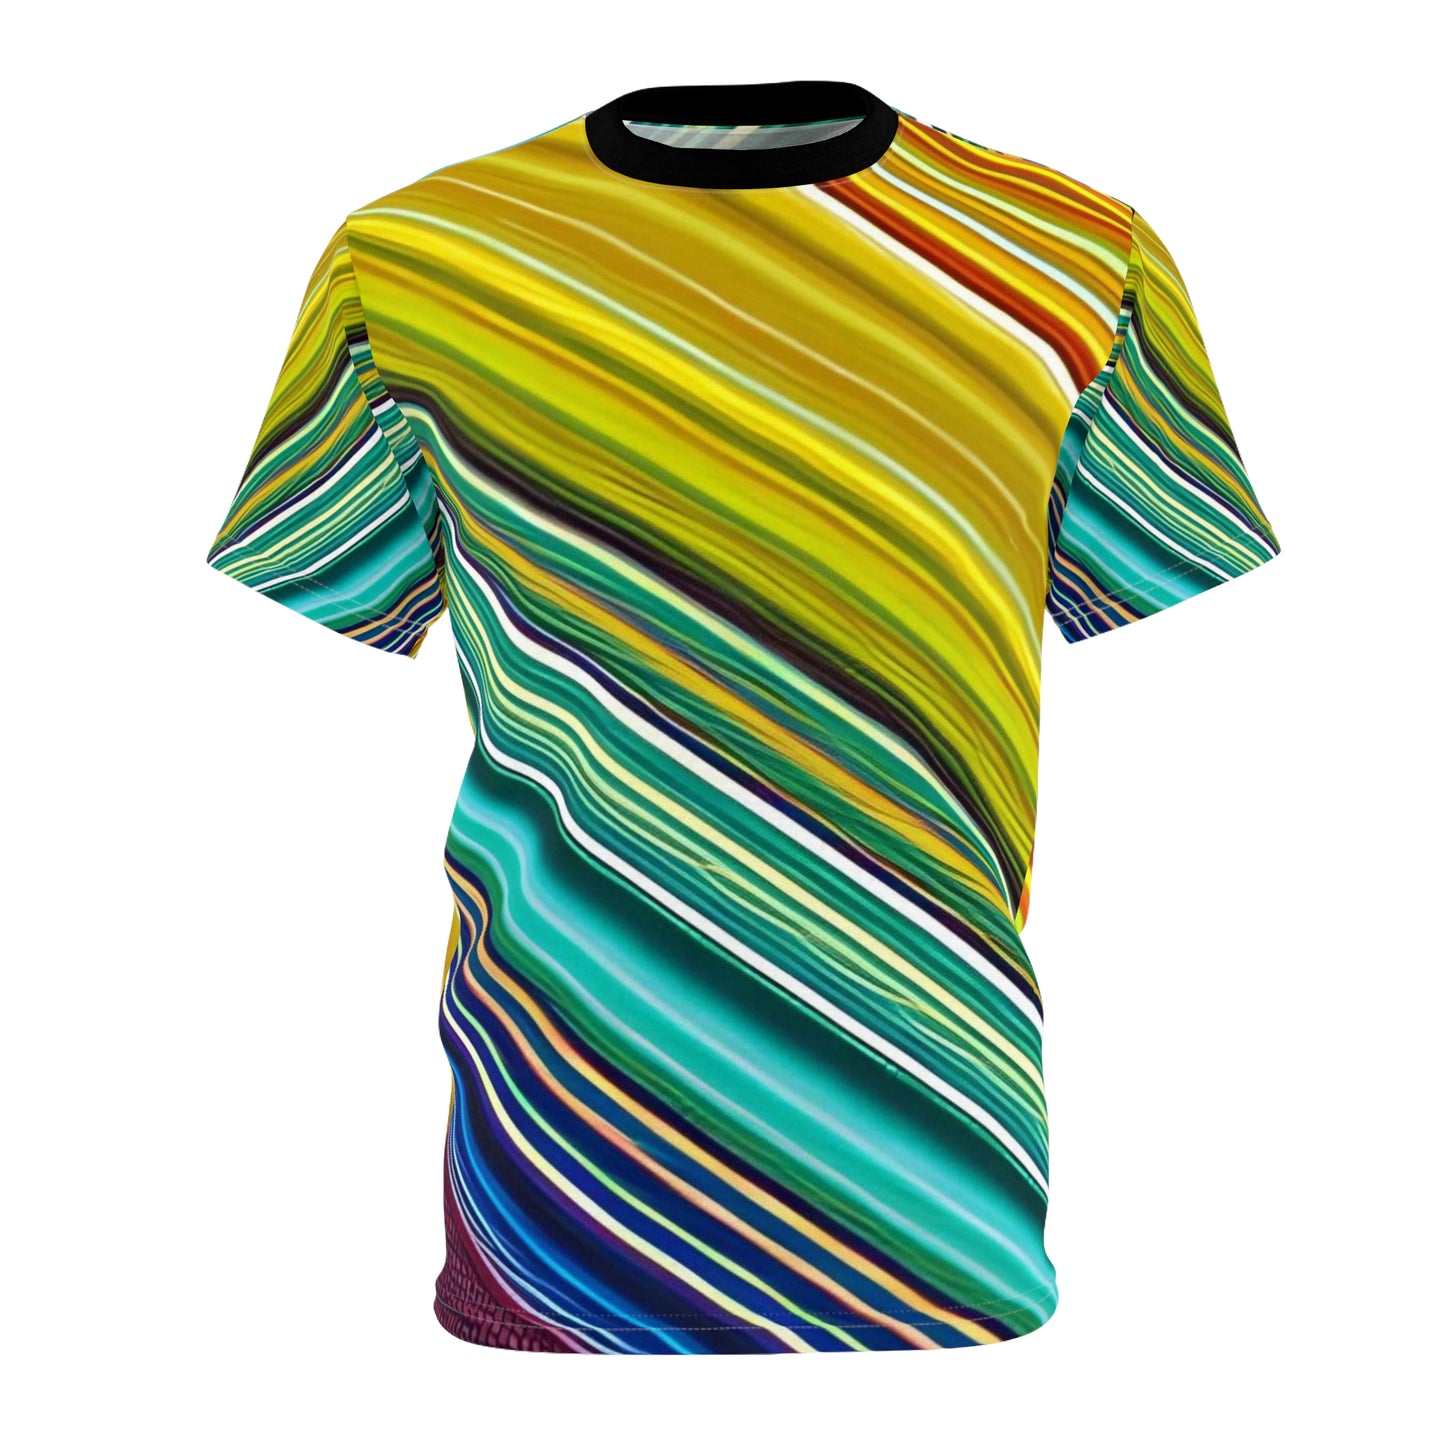 Yellow Streak shons Cut & Sew Tee T's T-shirt